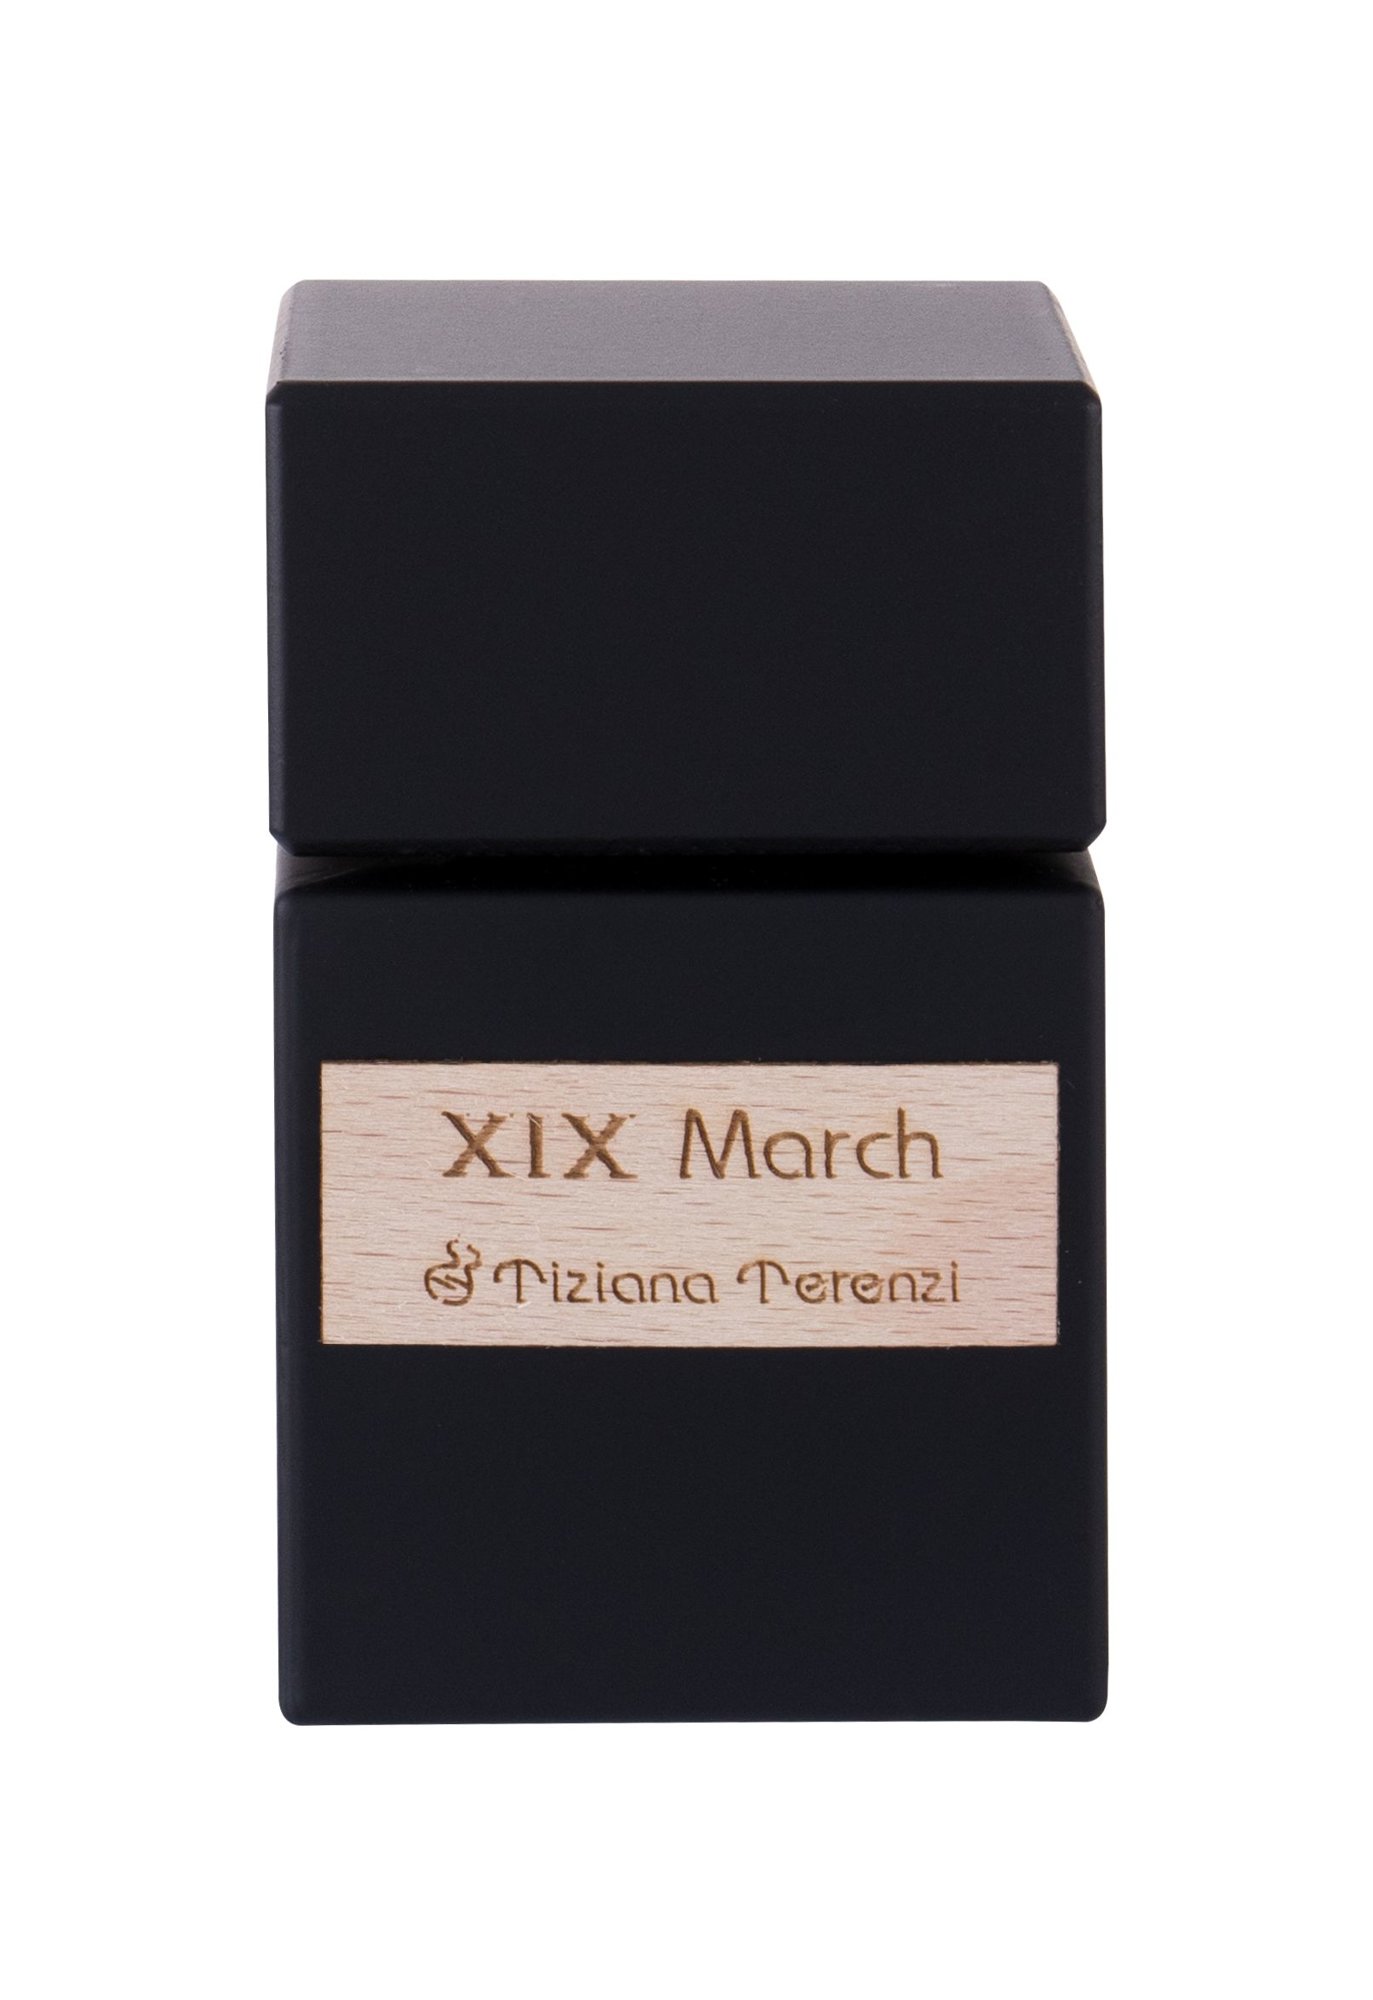 Tiziana Terenzi XIX March 15 ml NIŠINIAI Kvepalai (atomaizeris) Unisex Parfum